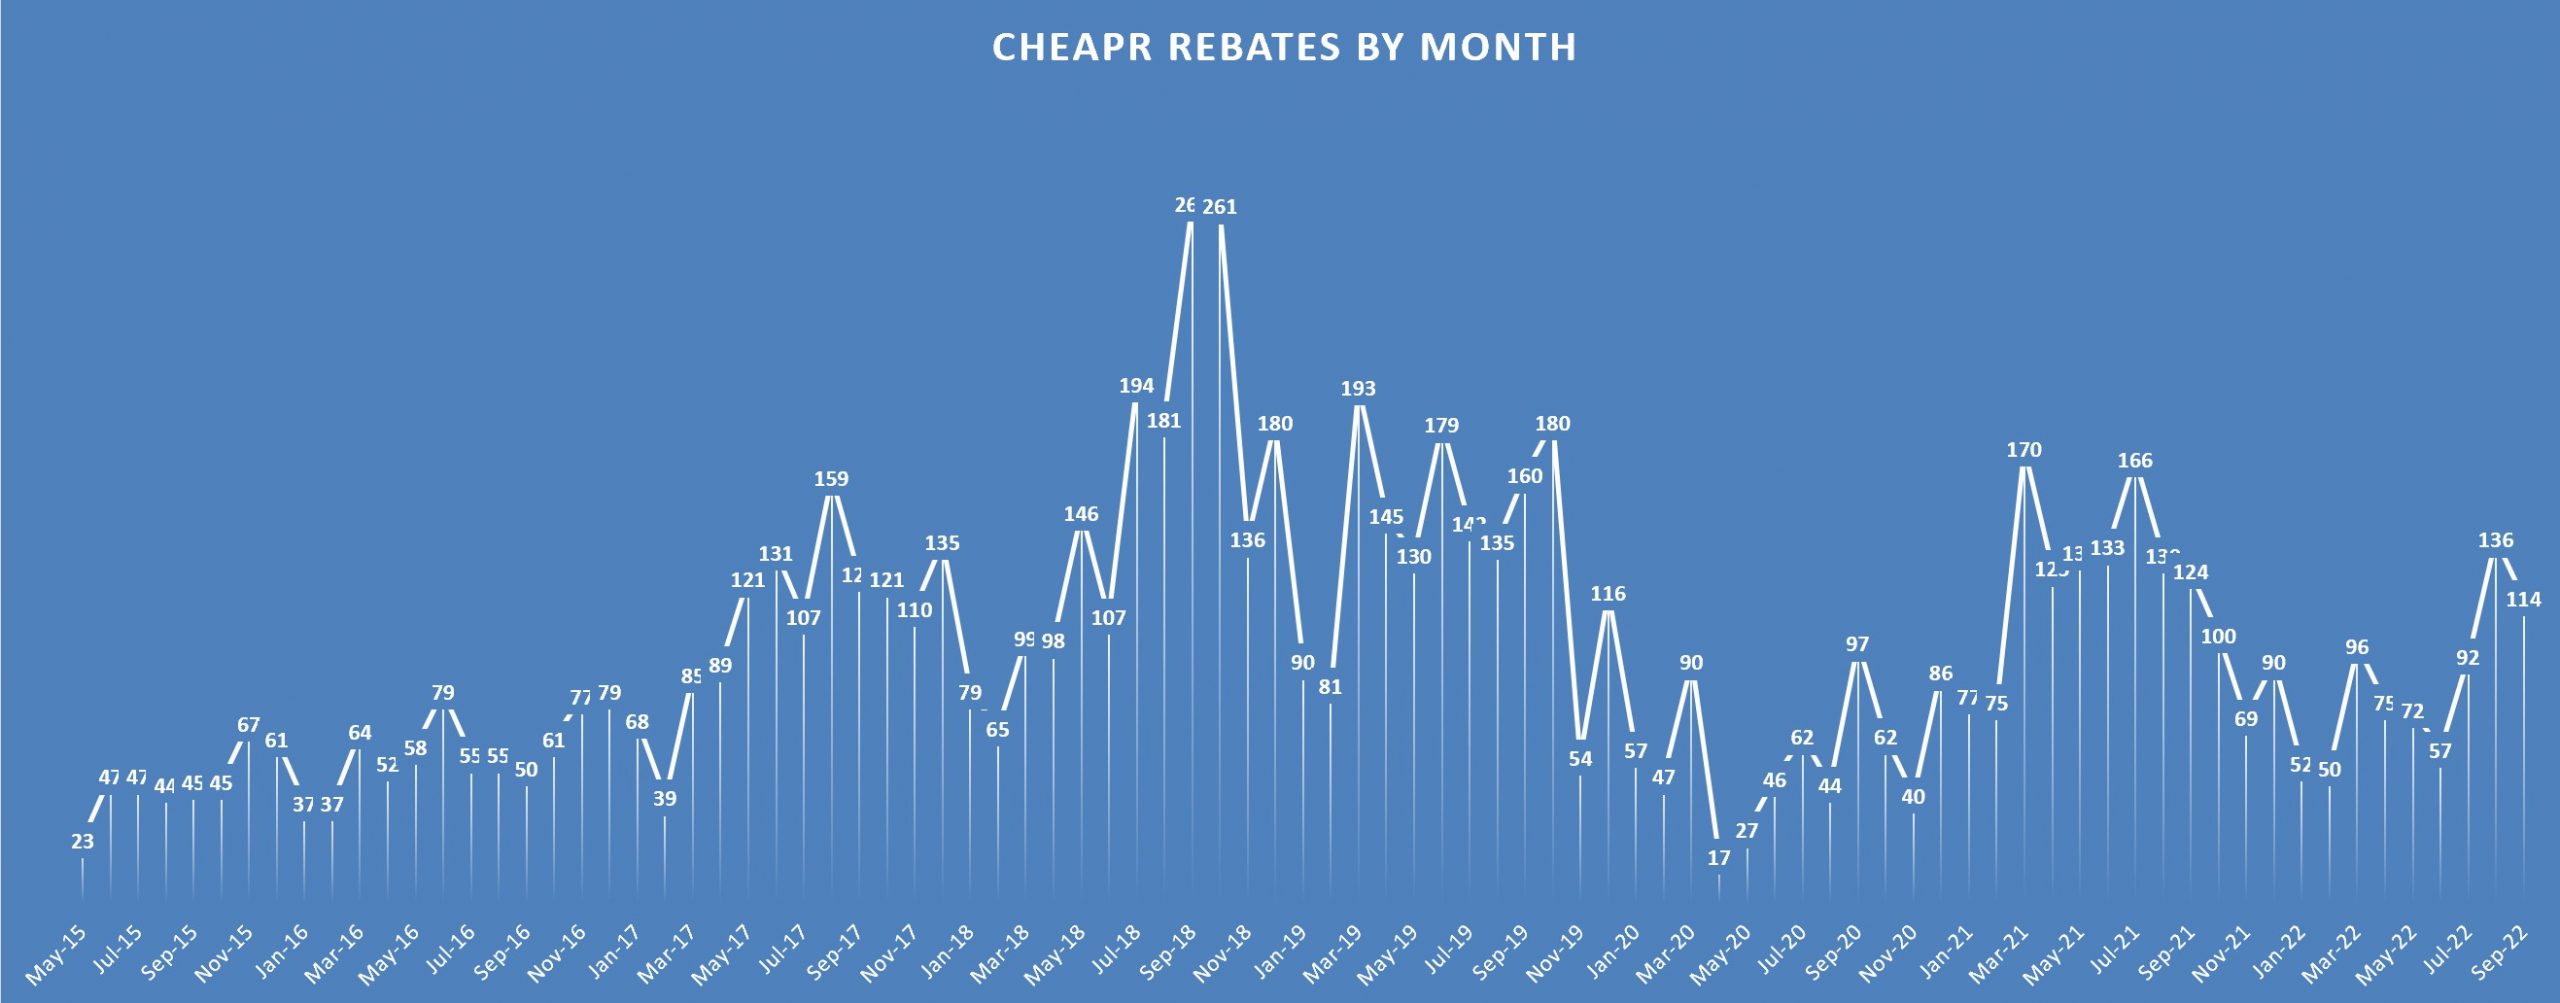 CHEAPR rebates by month thru September 2022